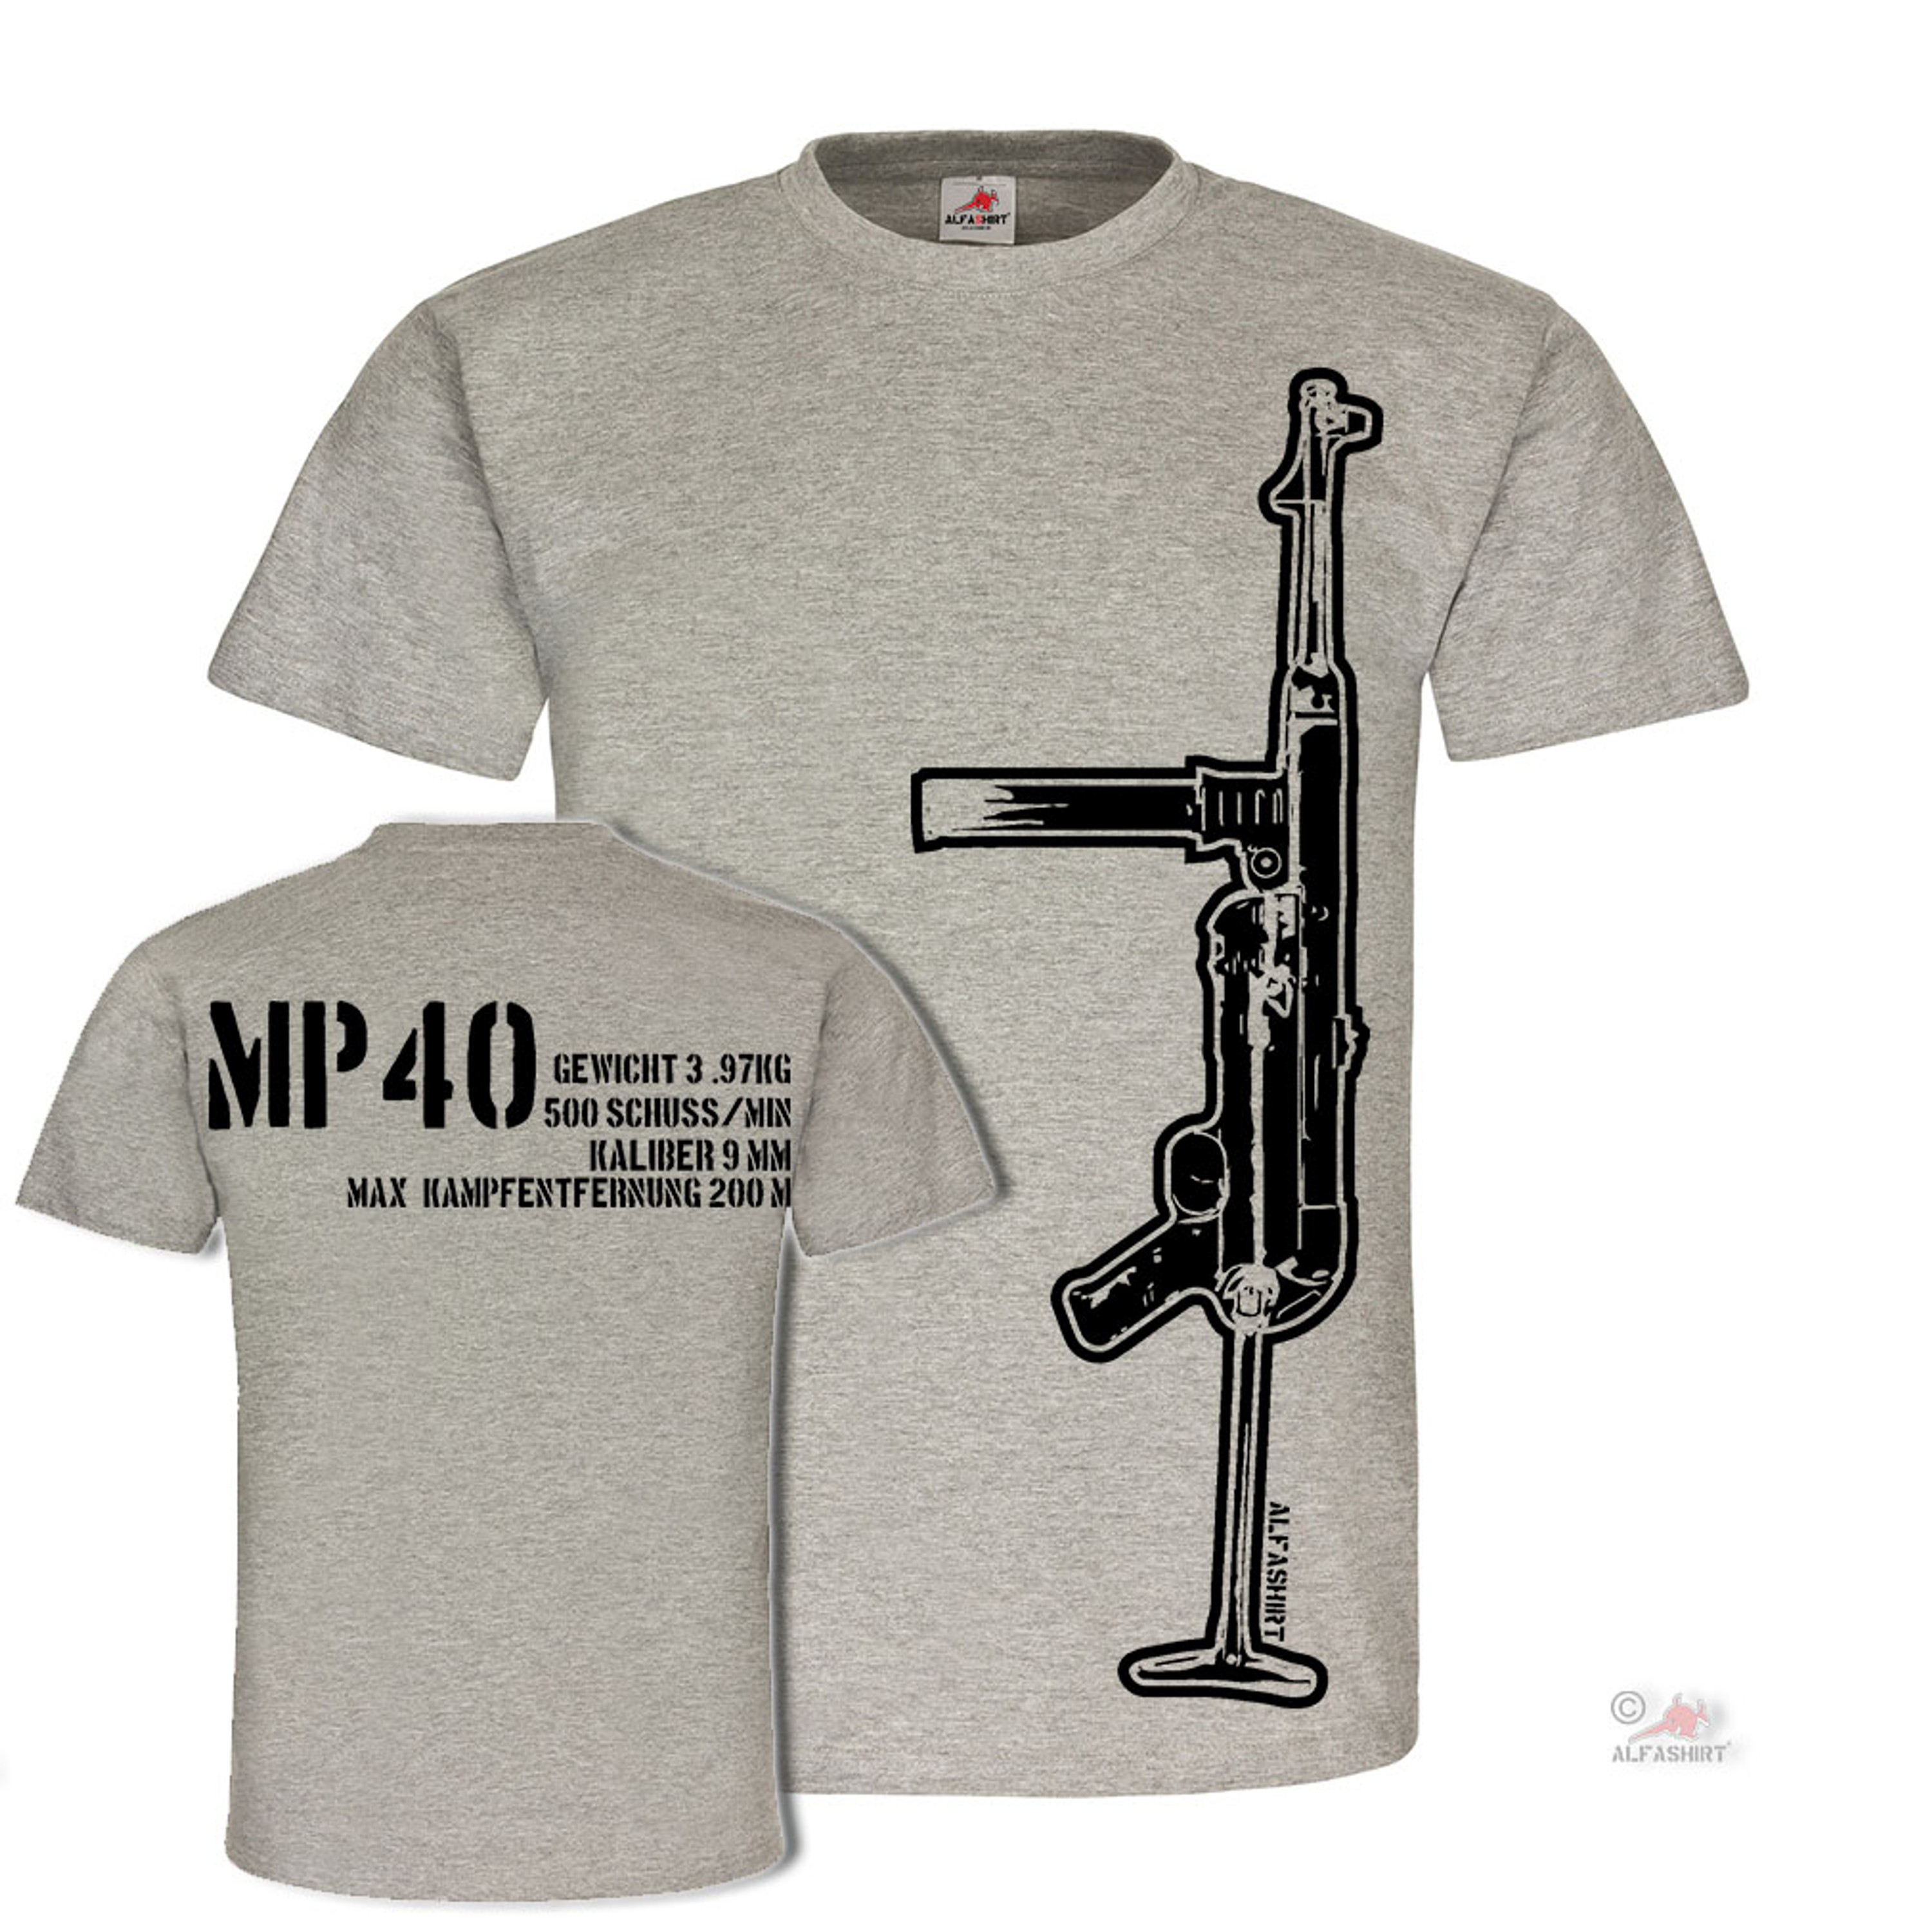 Submachine Gun Mp40 Technical Data Weapon Deco Rod Magazine T Shirt 19667 Alfashirt submachine gun mp40 technical data weapon deco rod magazine t shirt 19667